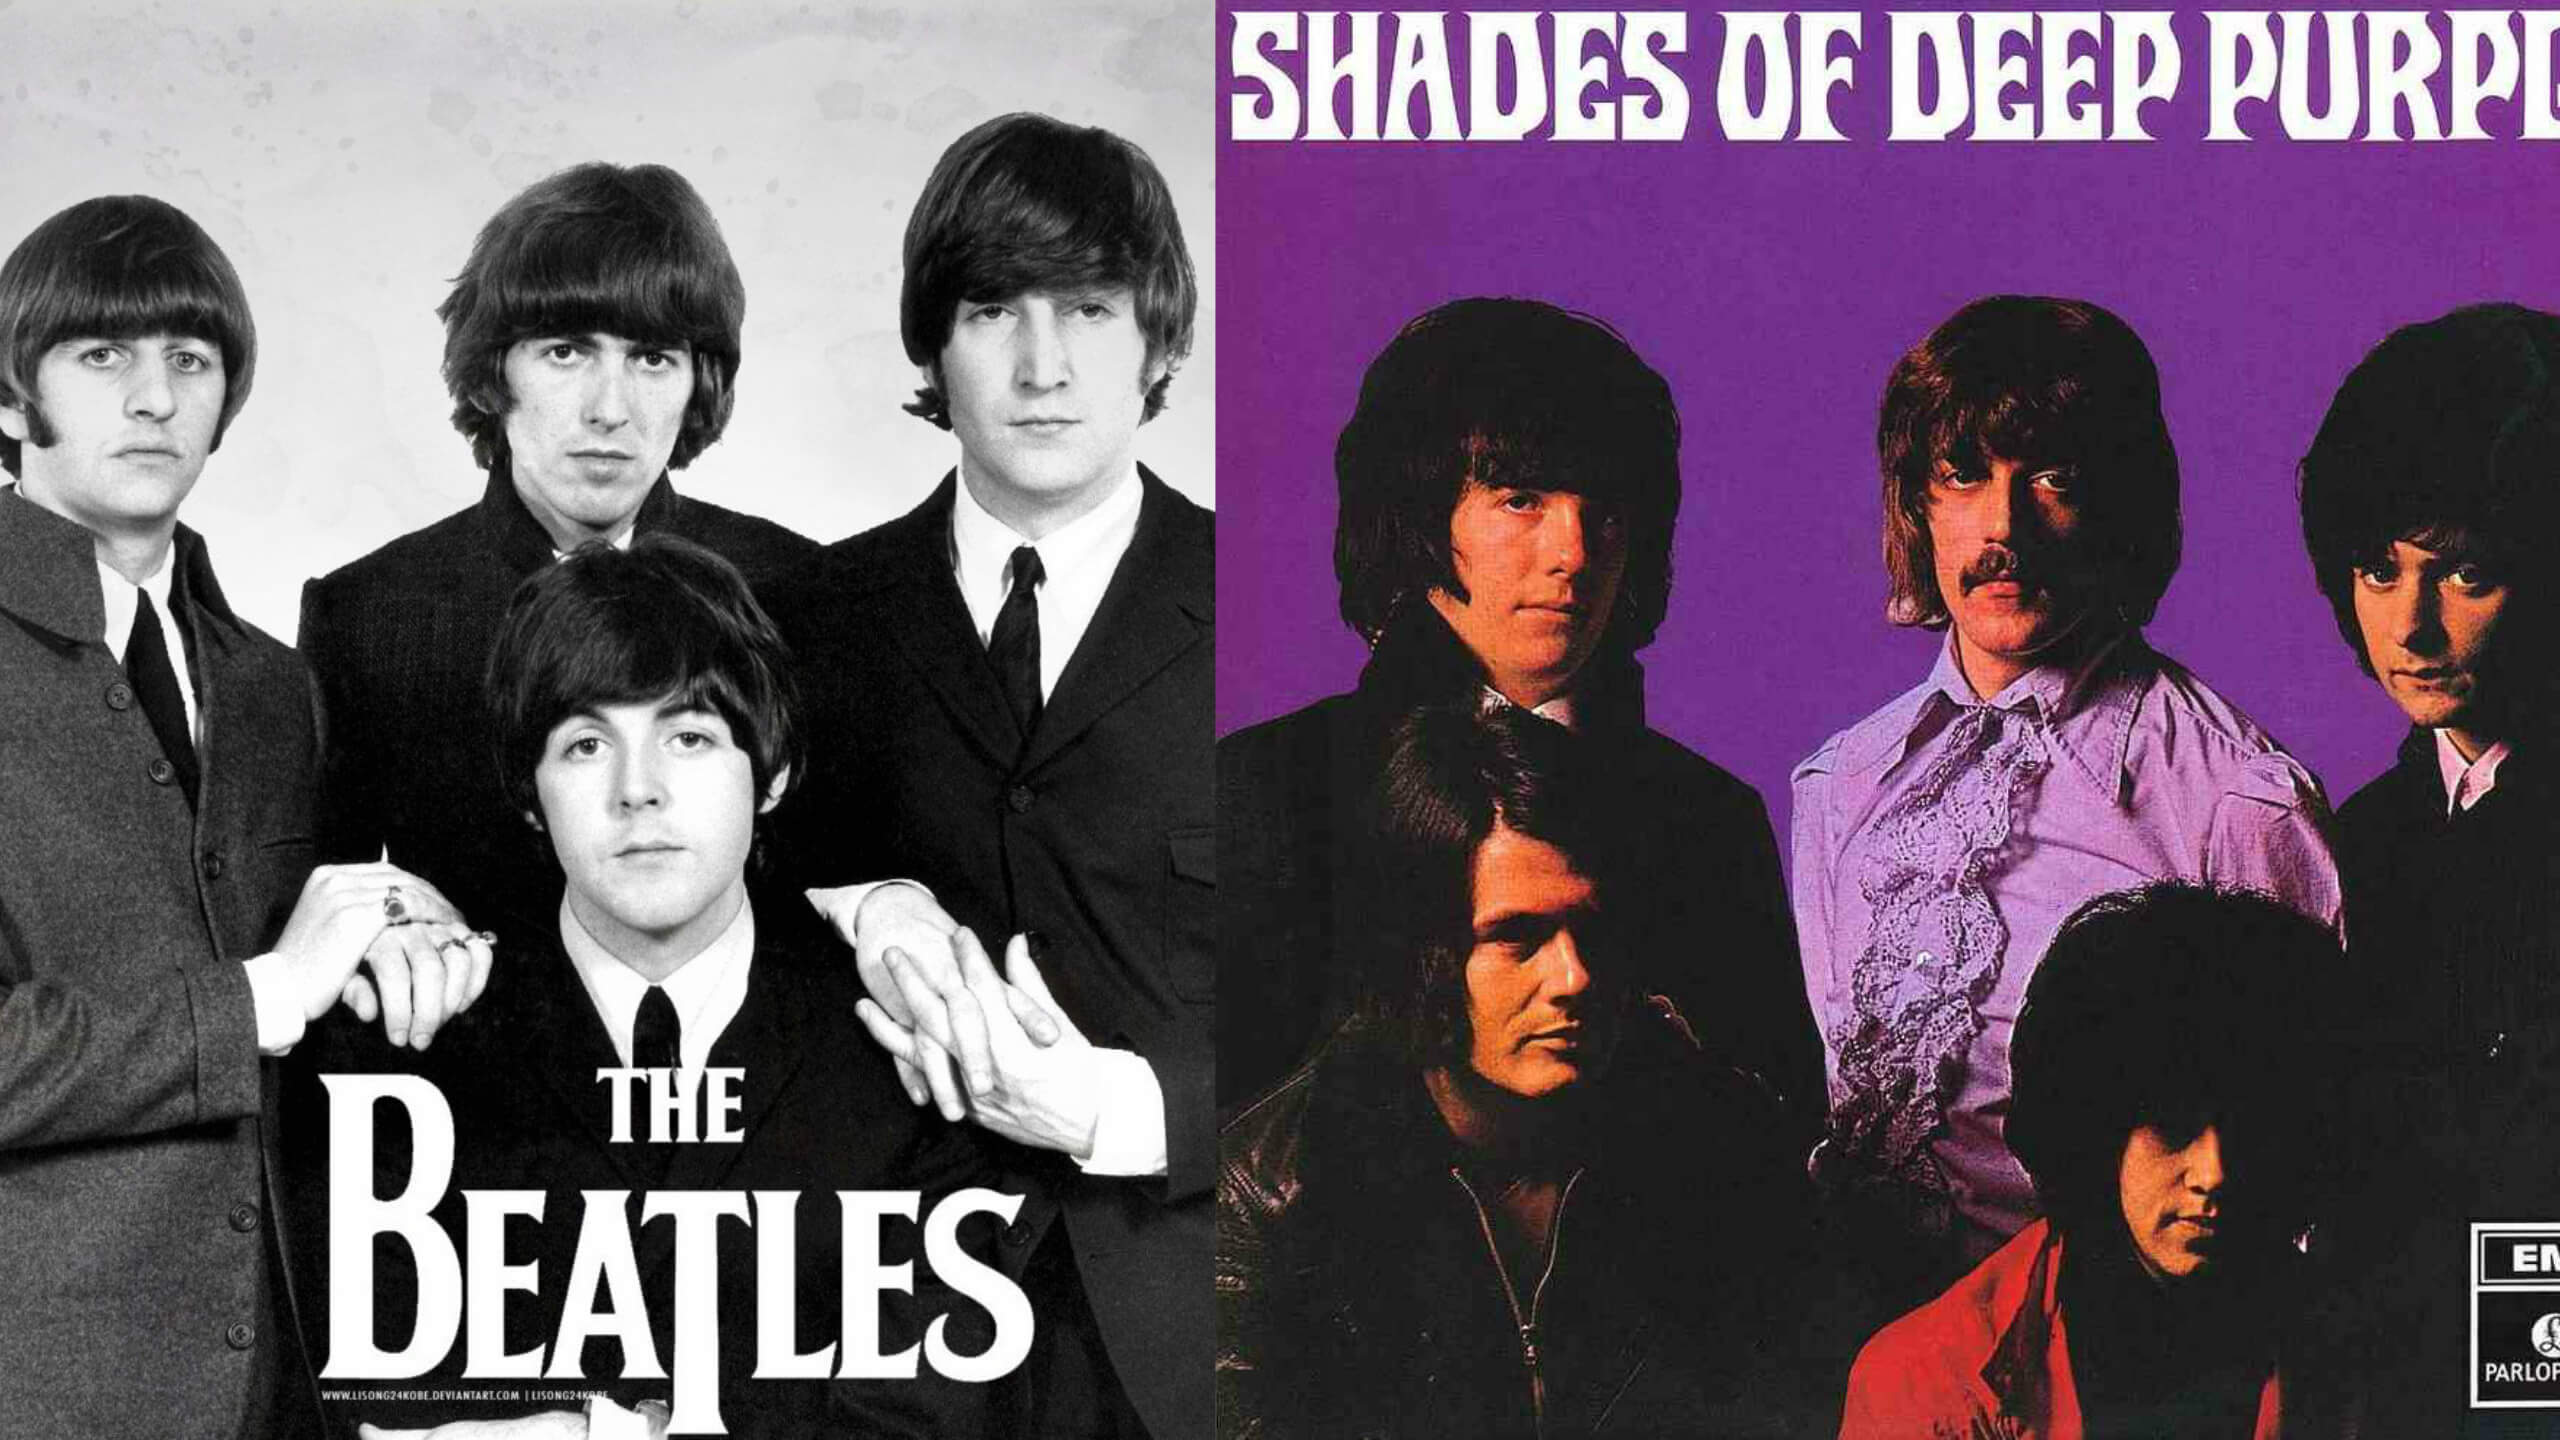 The Beatles and Deep Purple